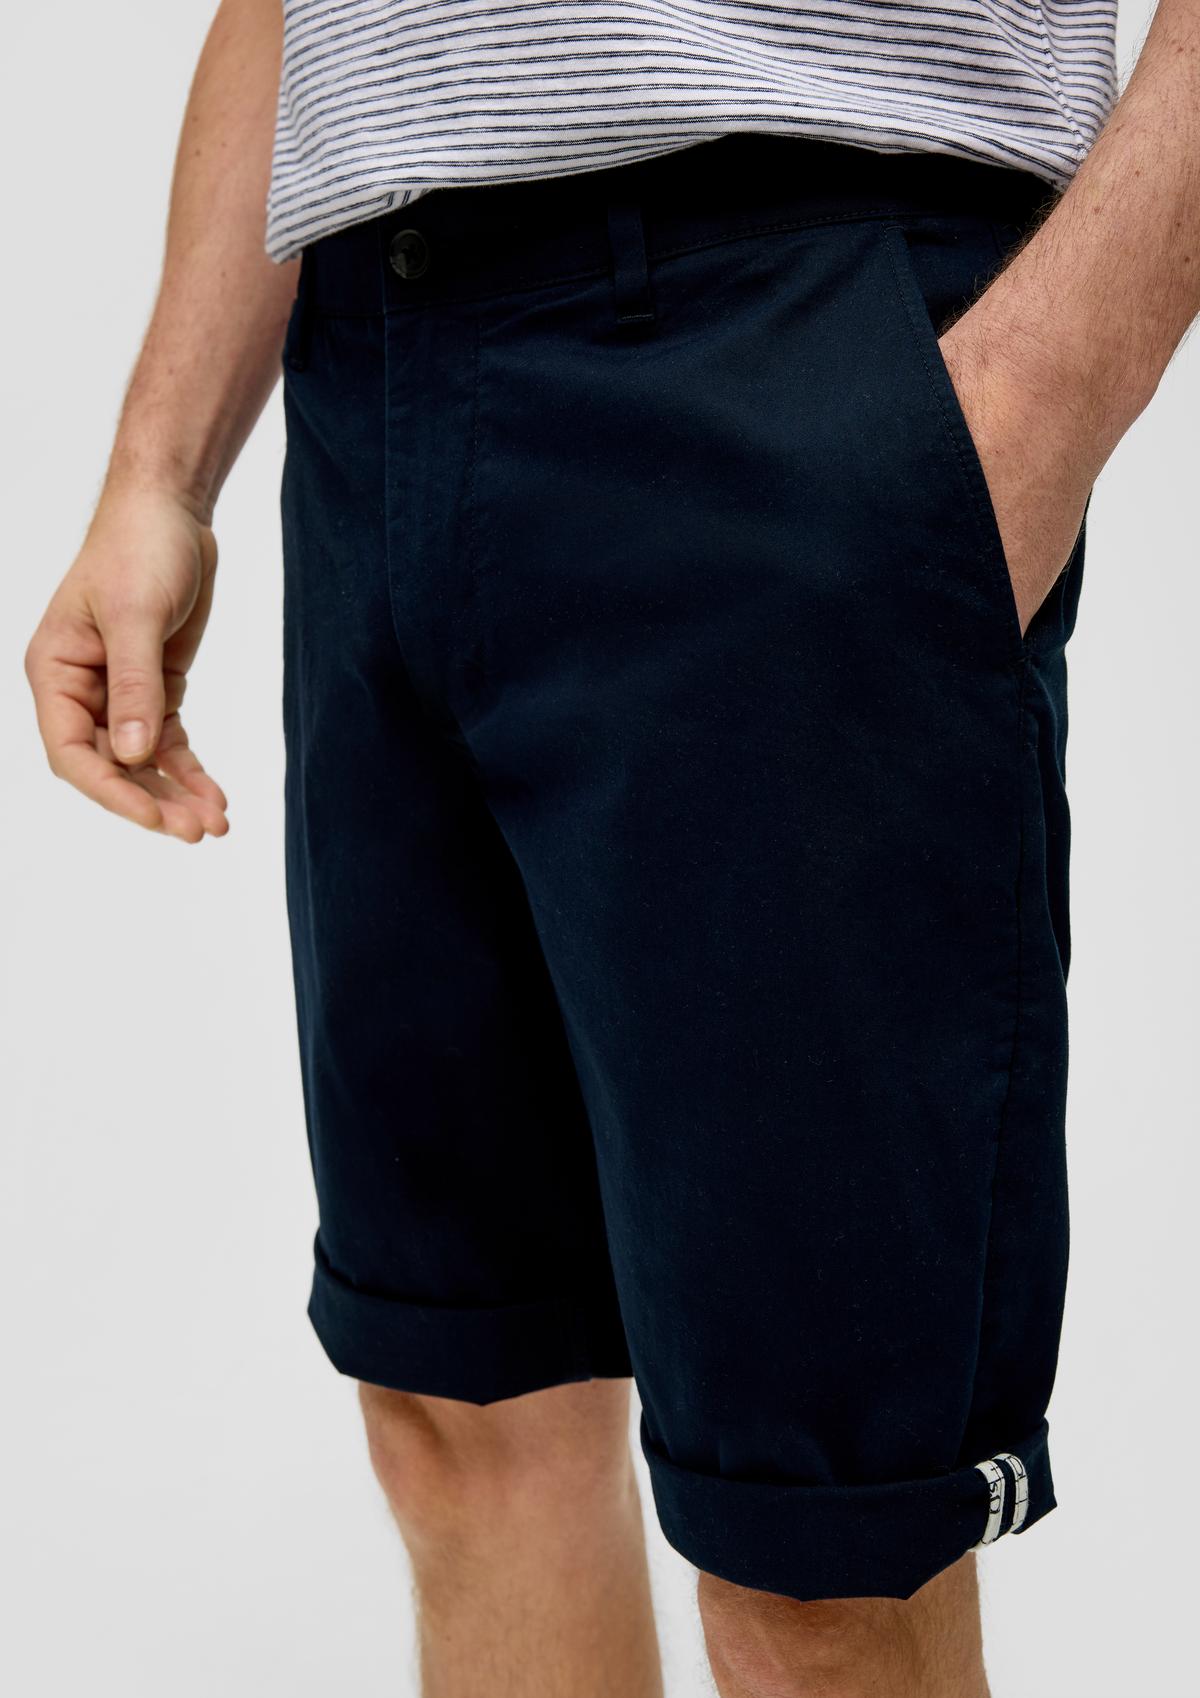 s.Oliver Phoenix Bermuda jeans / regular fit / mid rise / straight leg